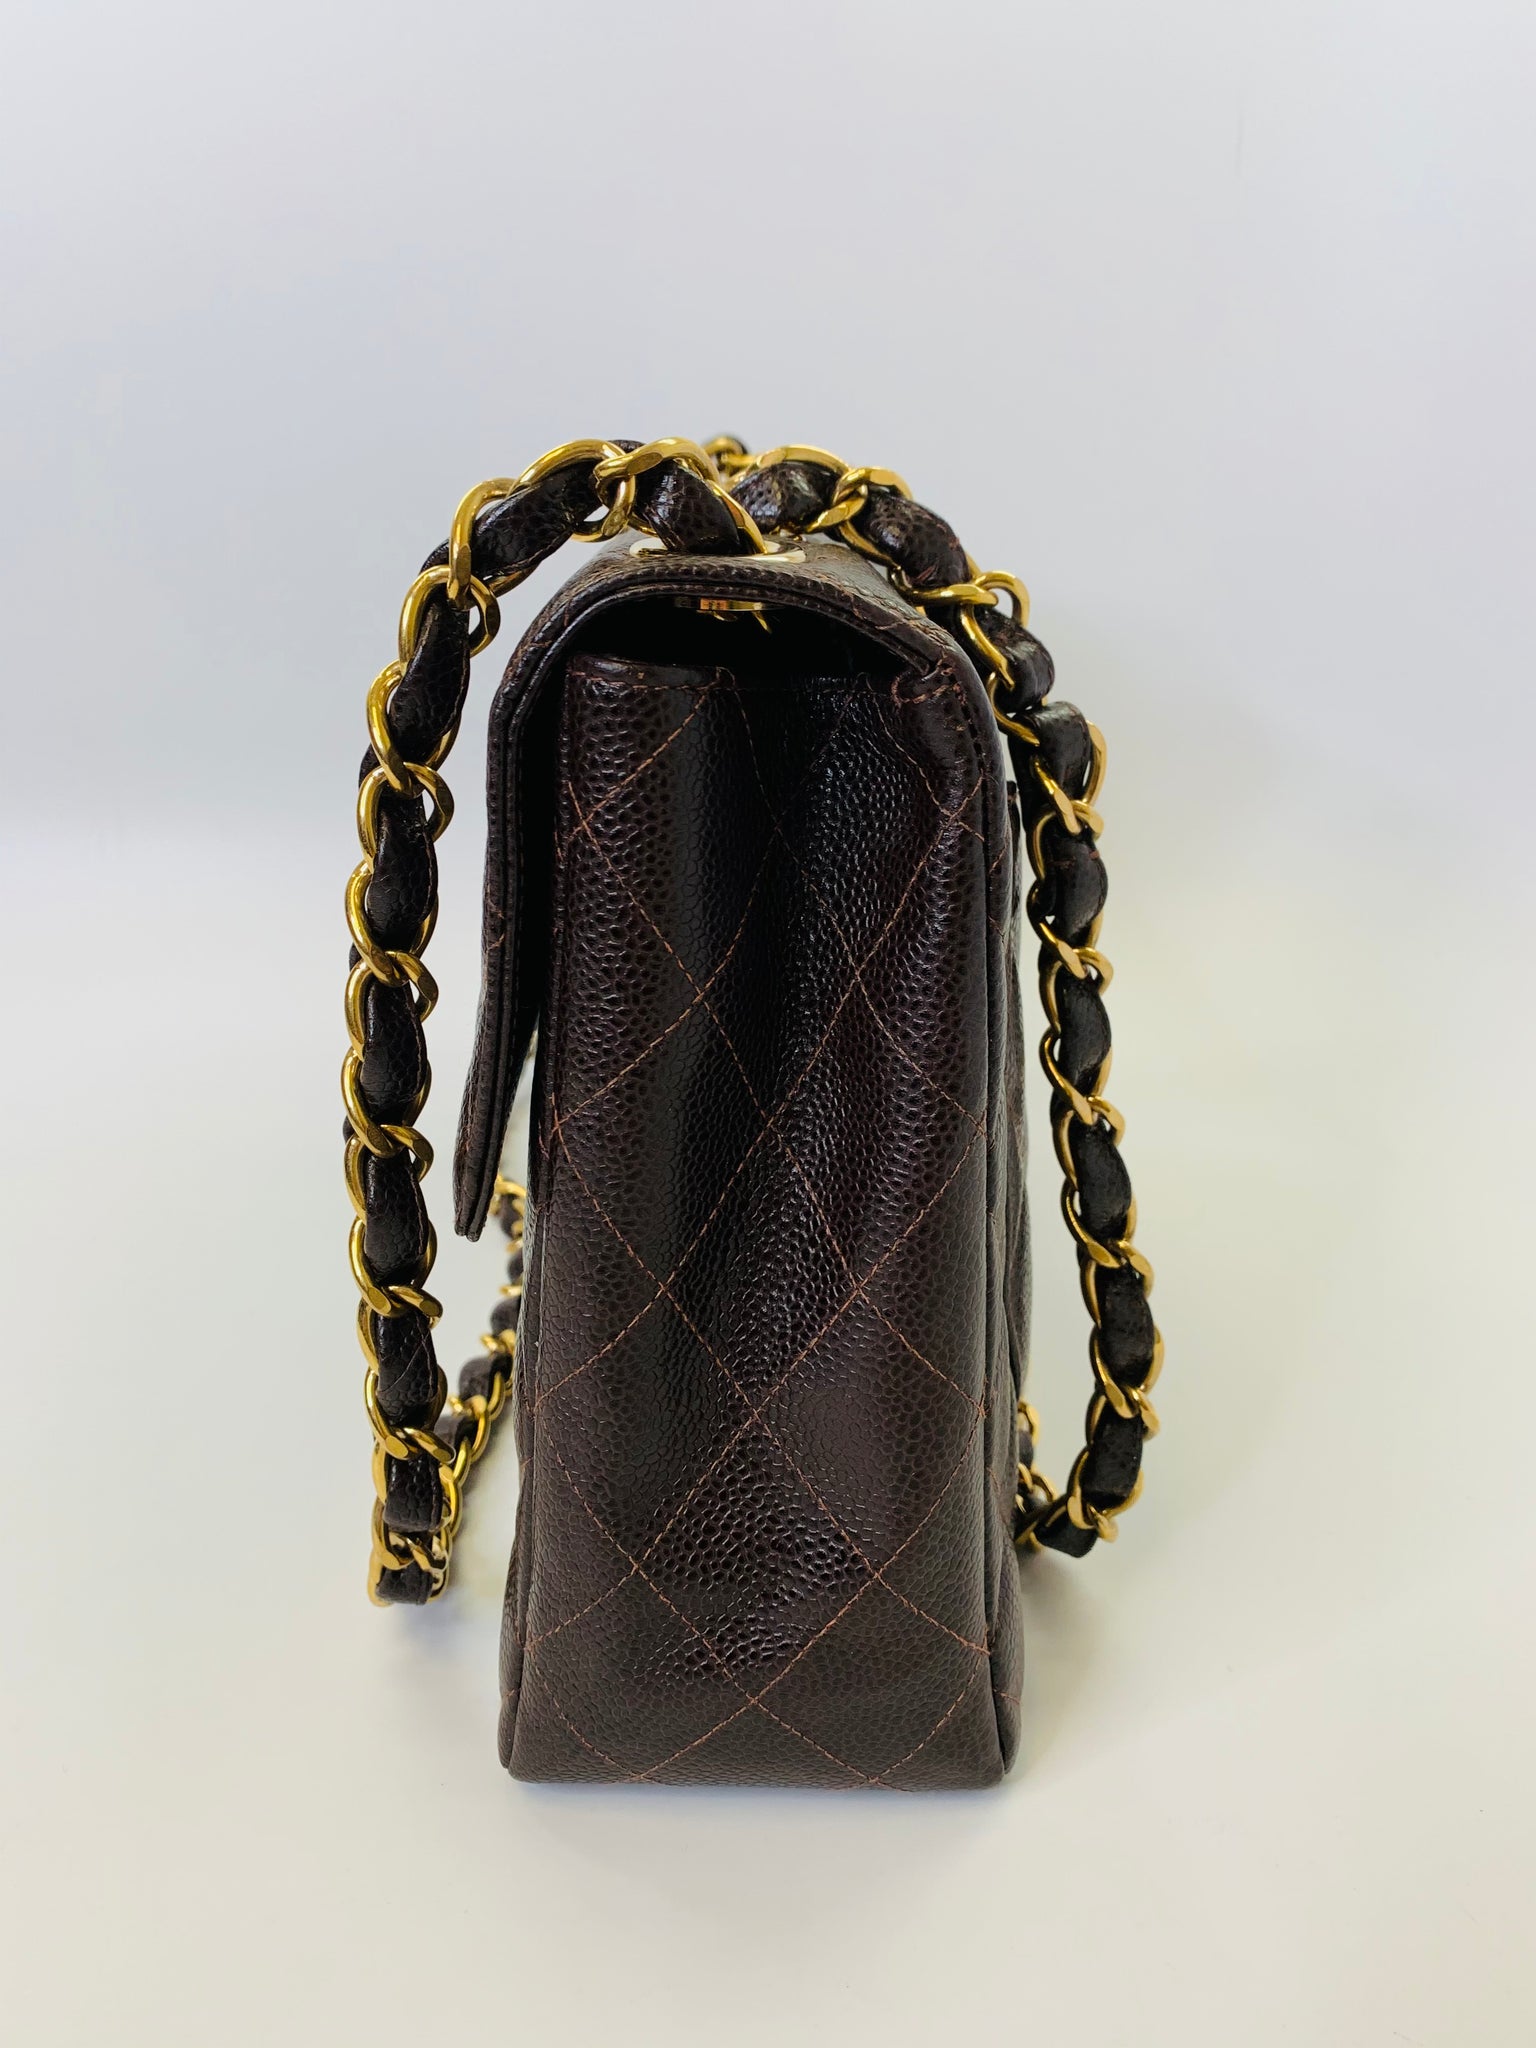 CHANEL Caviar Large Chain Shoulder Bag Leather Black Zip Goldper